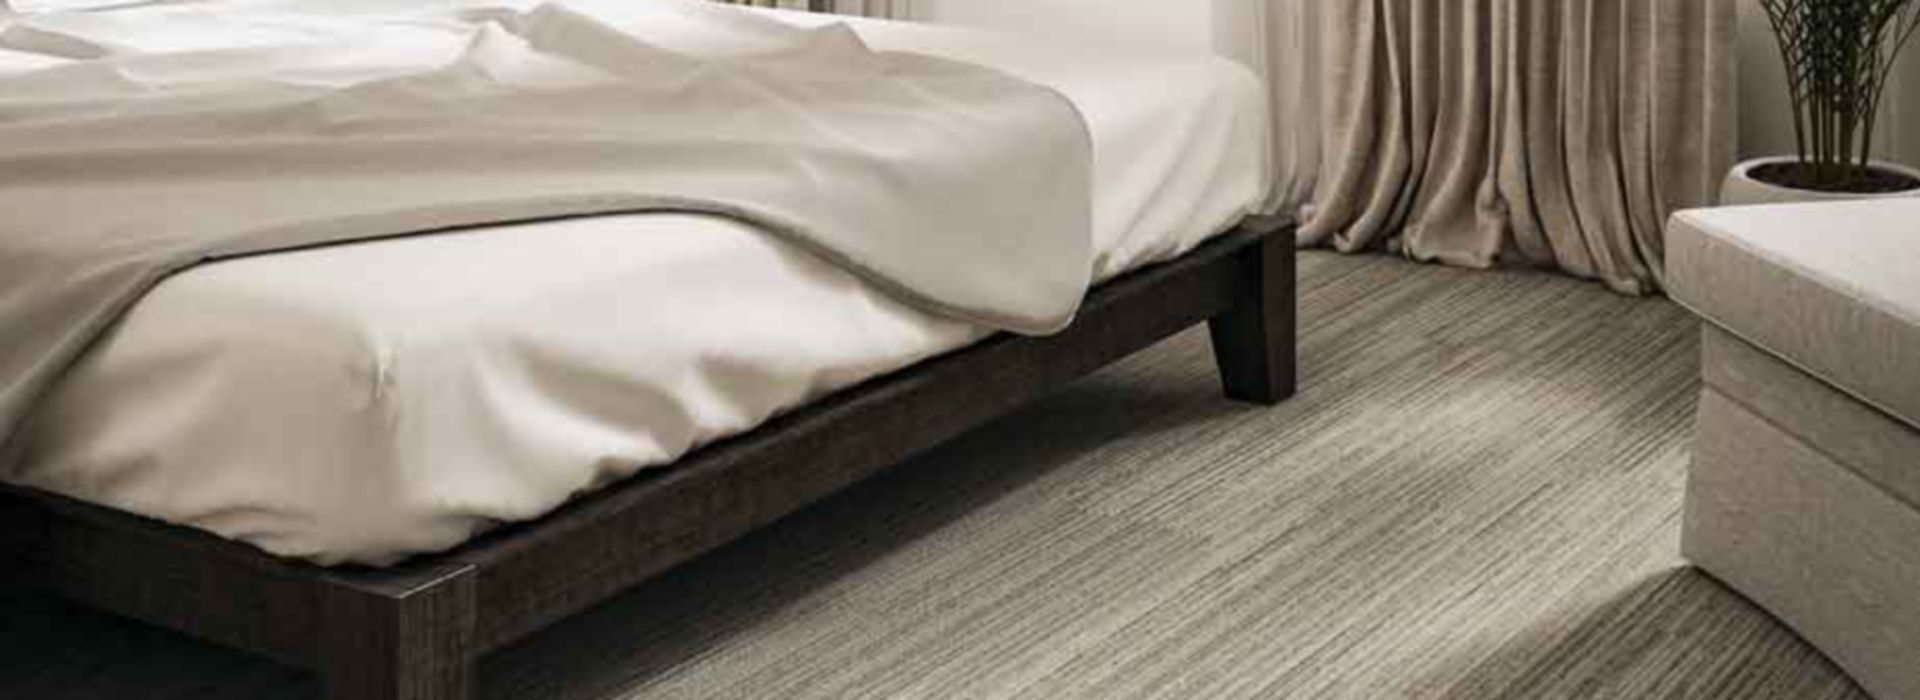 Interface SWTS 110 plank carpet tile in hotel guest room imagen número 1